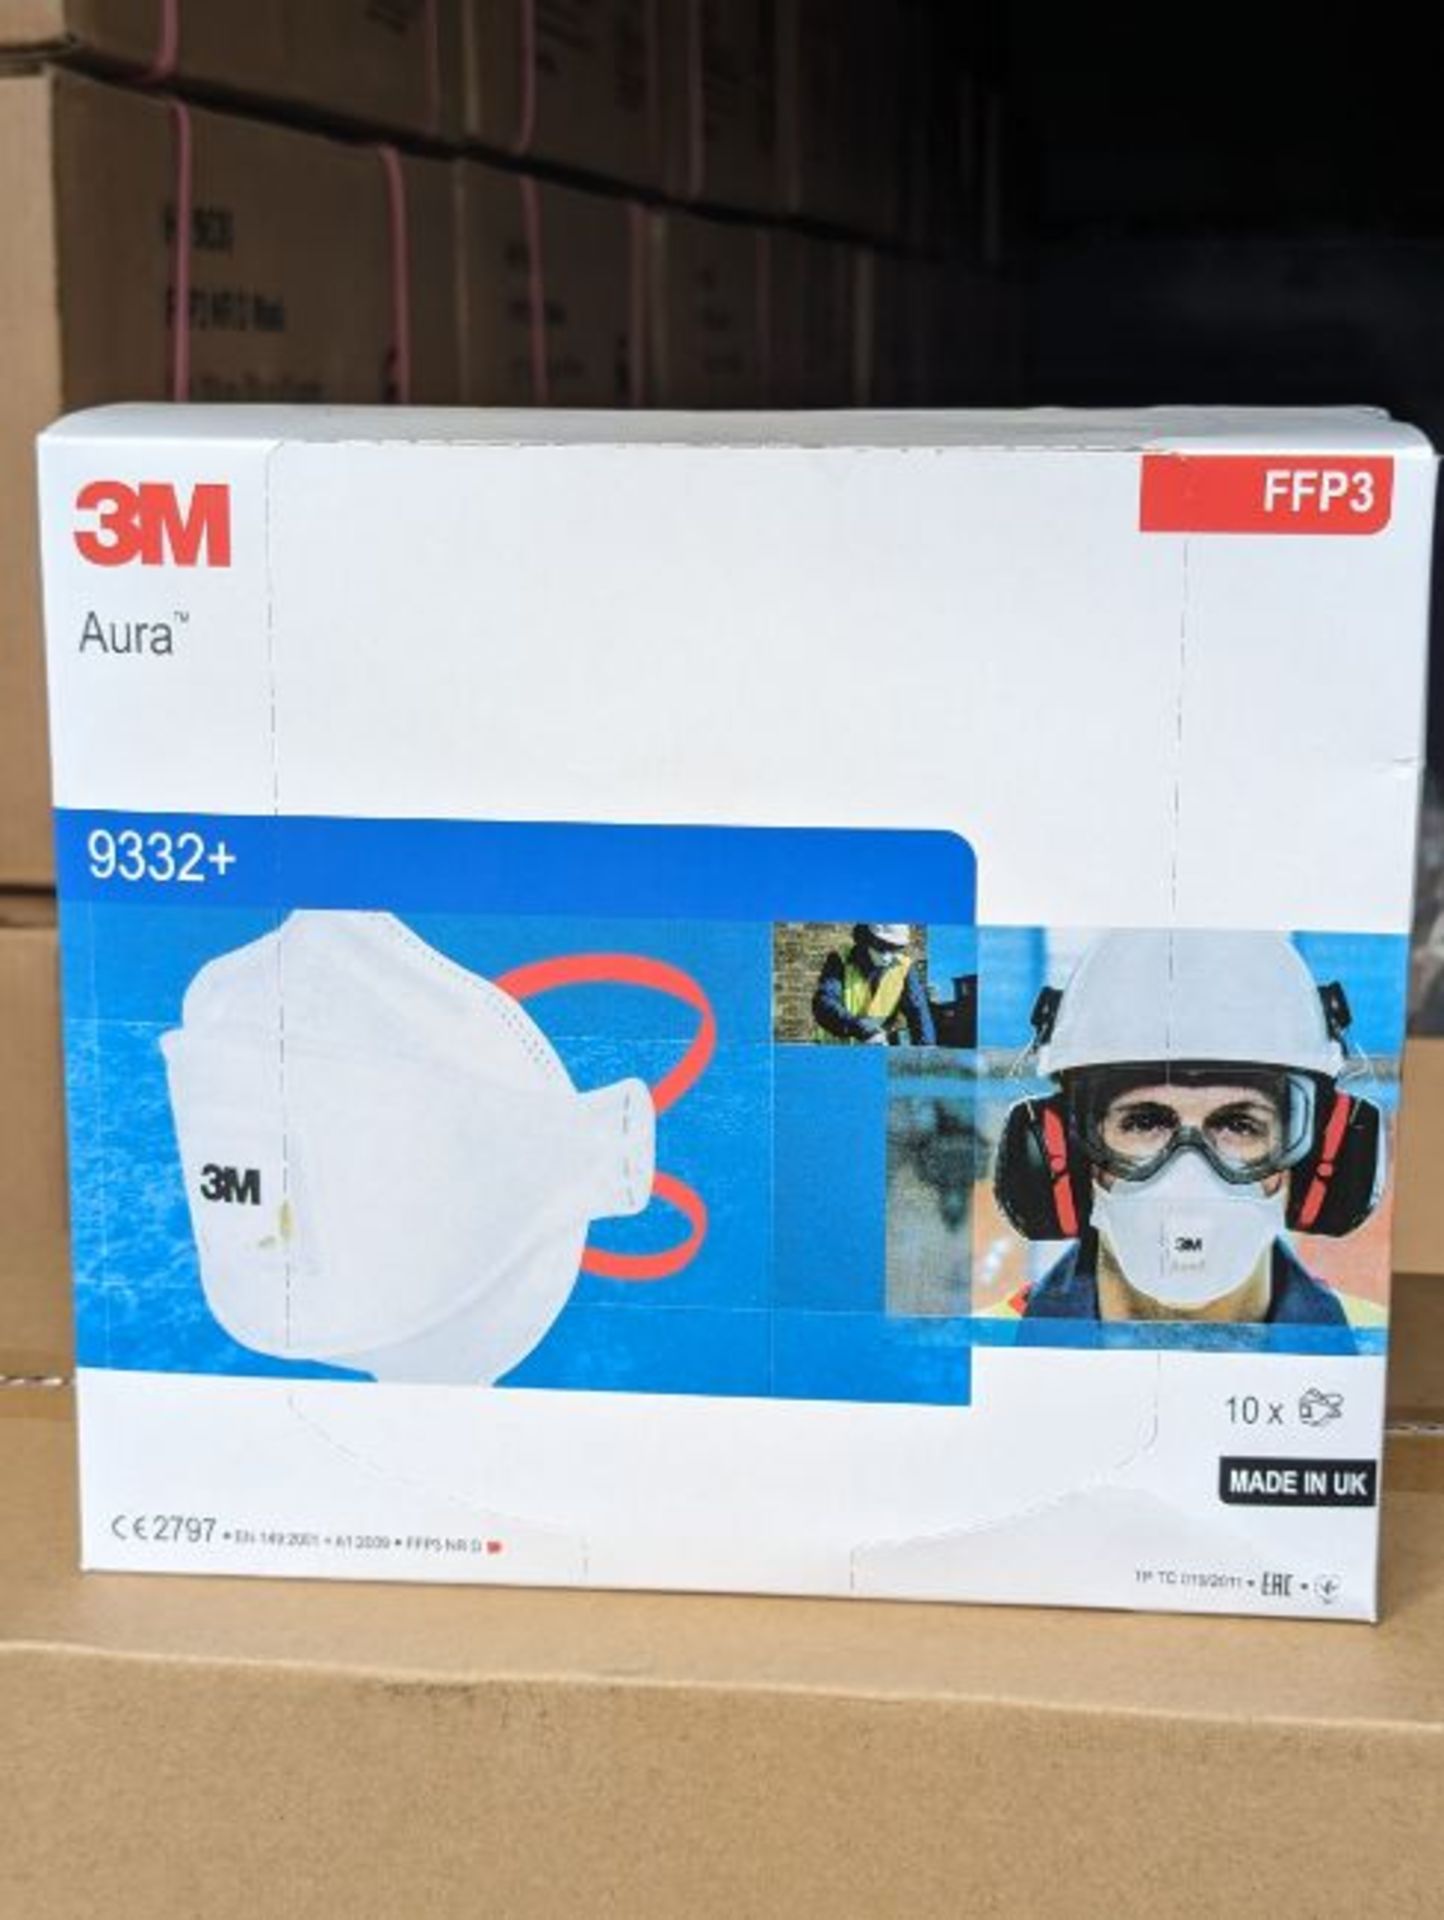 3M Aura FFP3 9332+ dust mask box of 120 units - Image 4 of 4